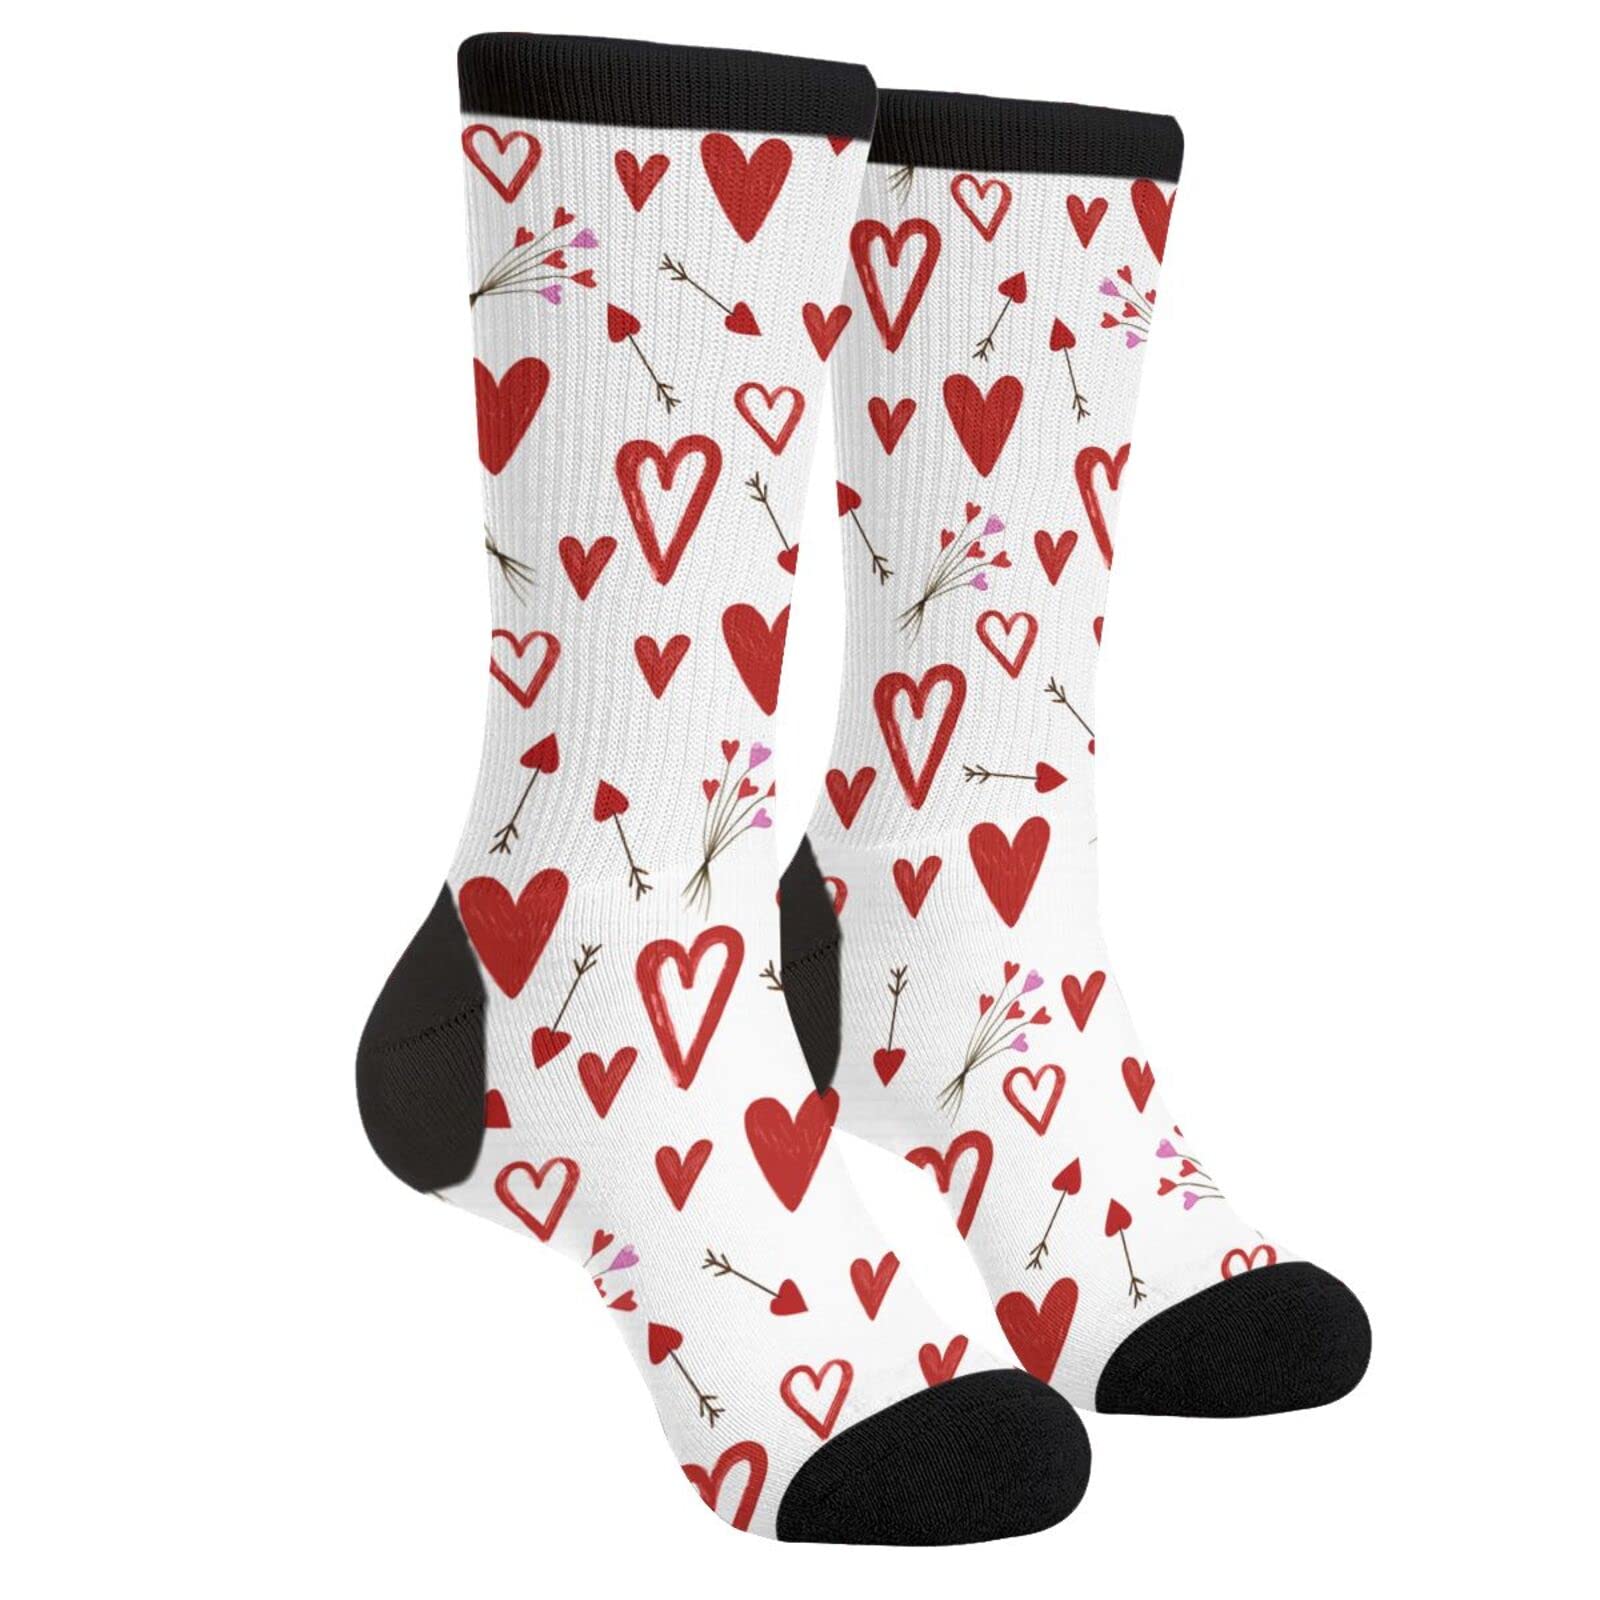 Niuyoif Valentine Socks